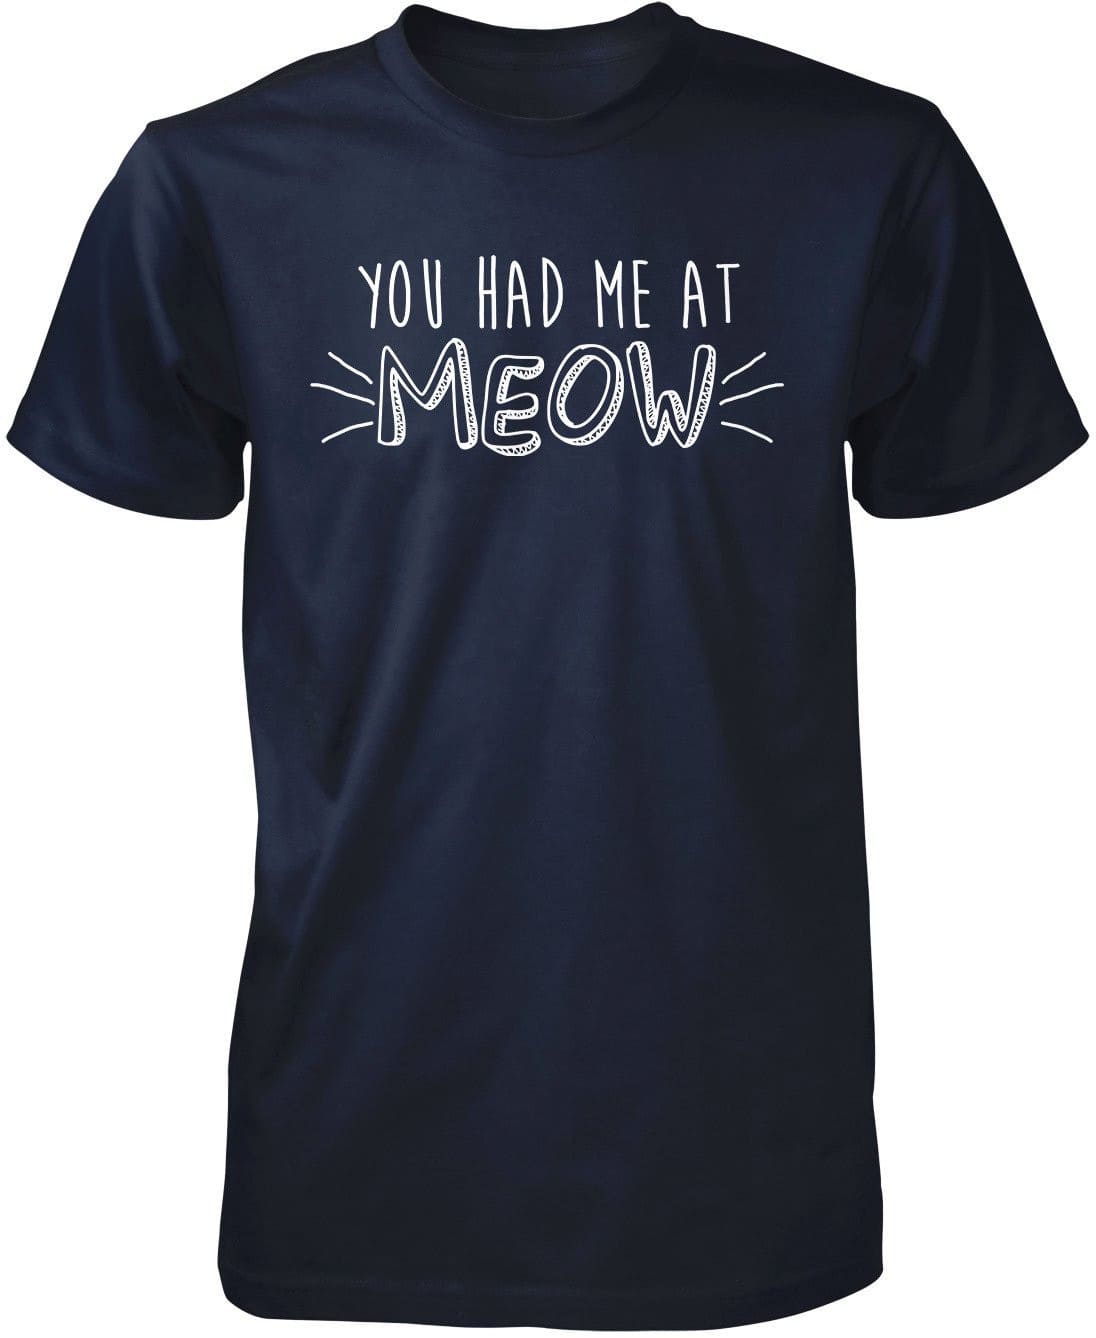 You Had Me At Meow T-Shirt